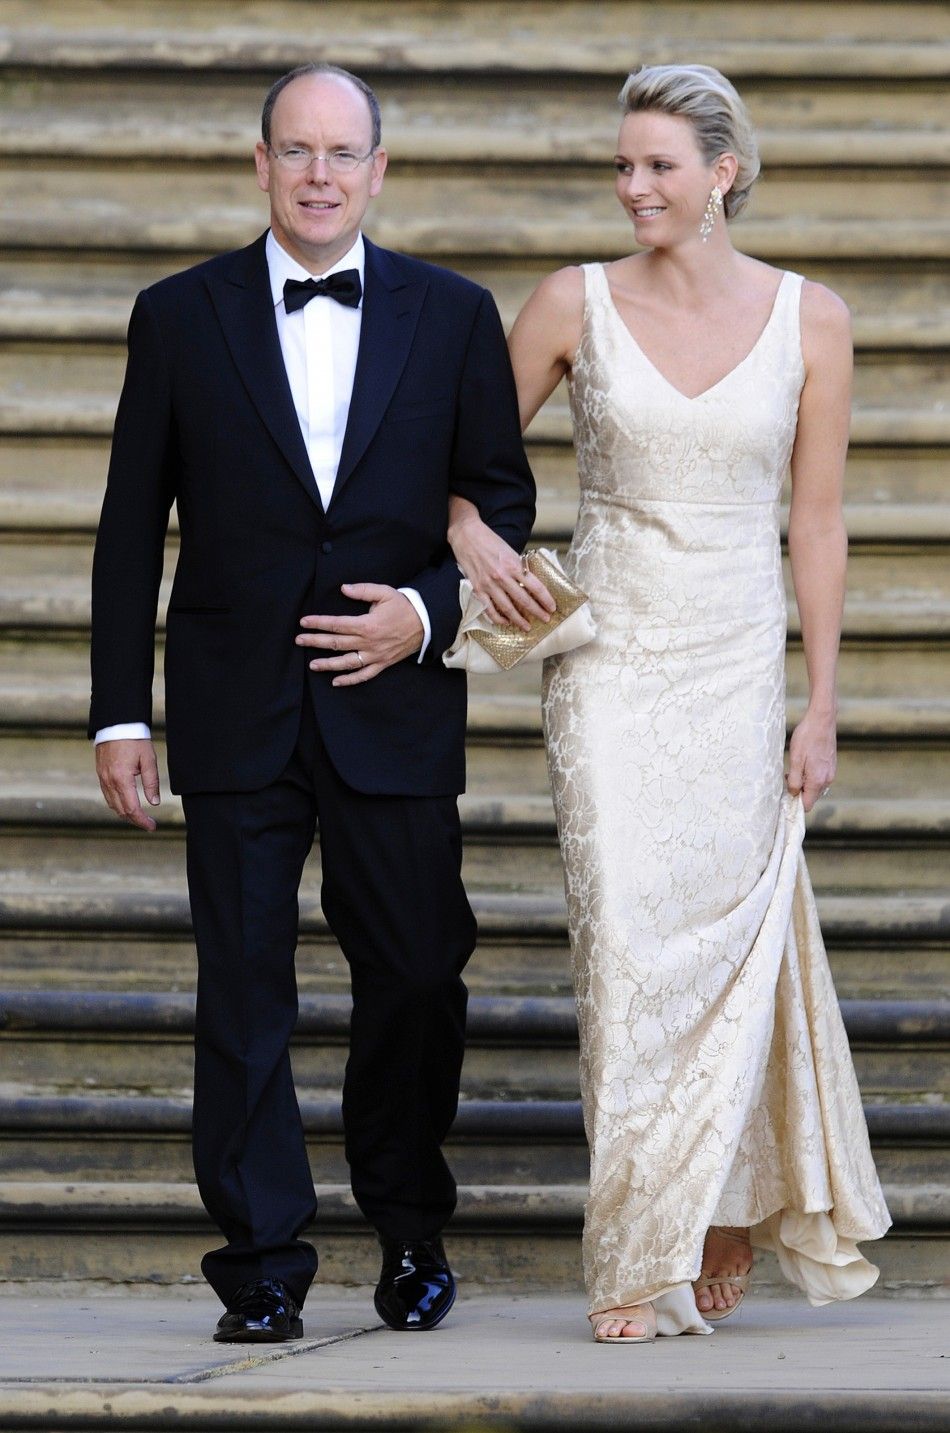 Prince Albert II and Princess Charlene of Monaco Enliven UK Charity Ball